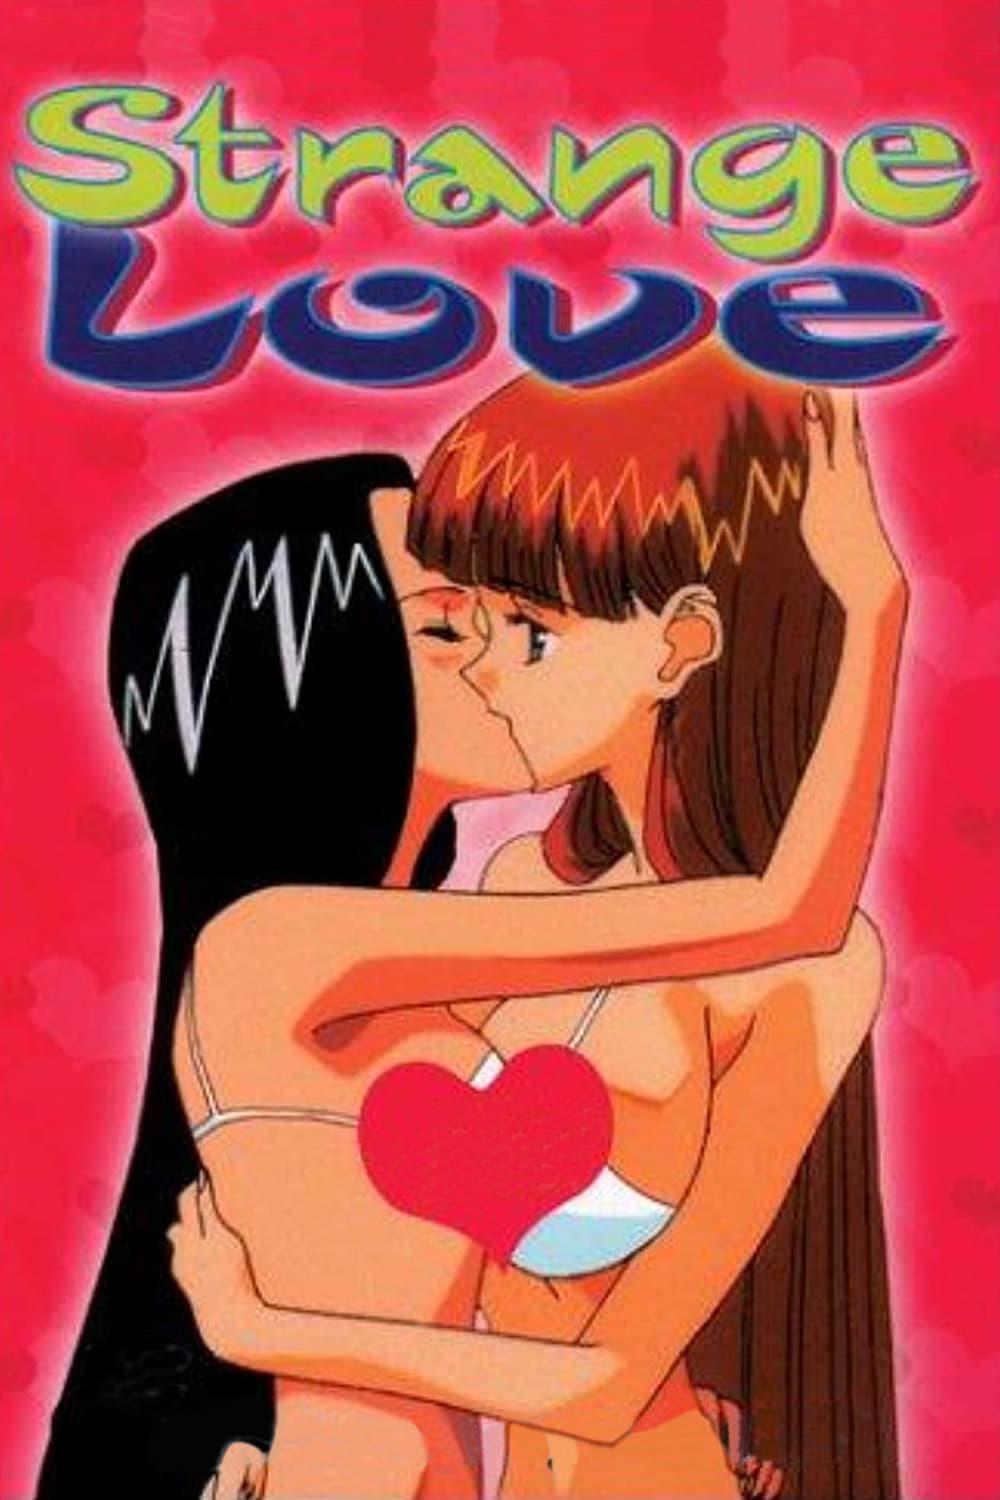 Strange Love poster